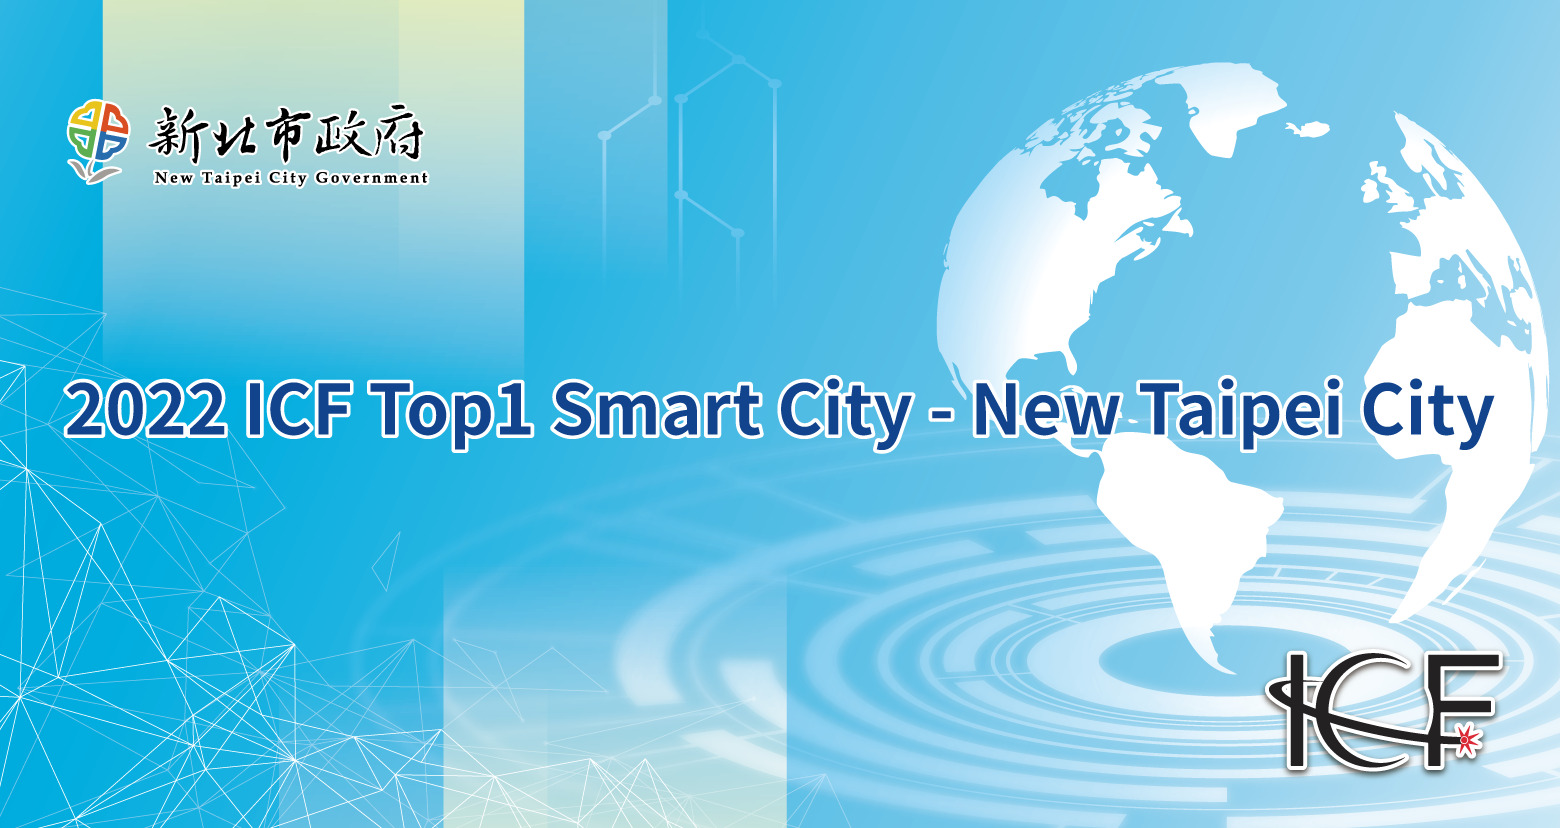 New Taipei City Government Won ICF Top1 of 2022 Global Smart City Award.